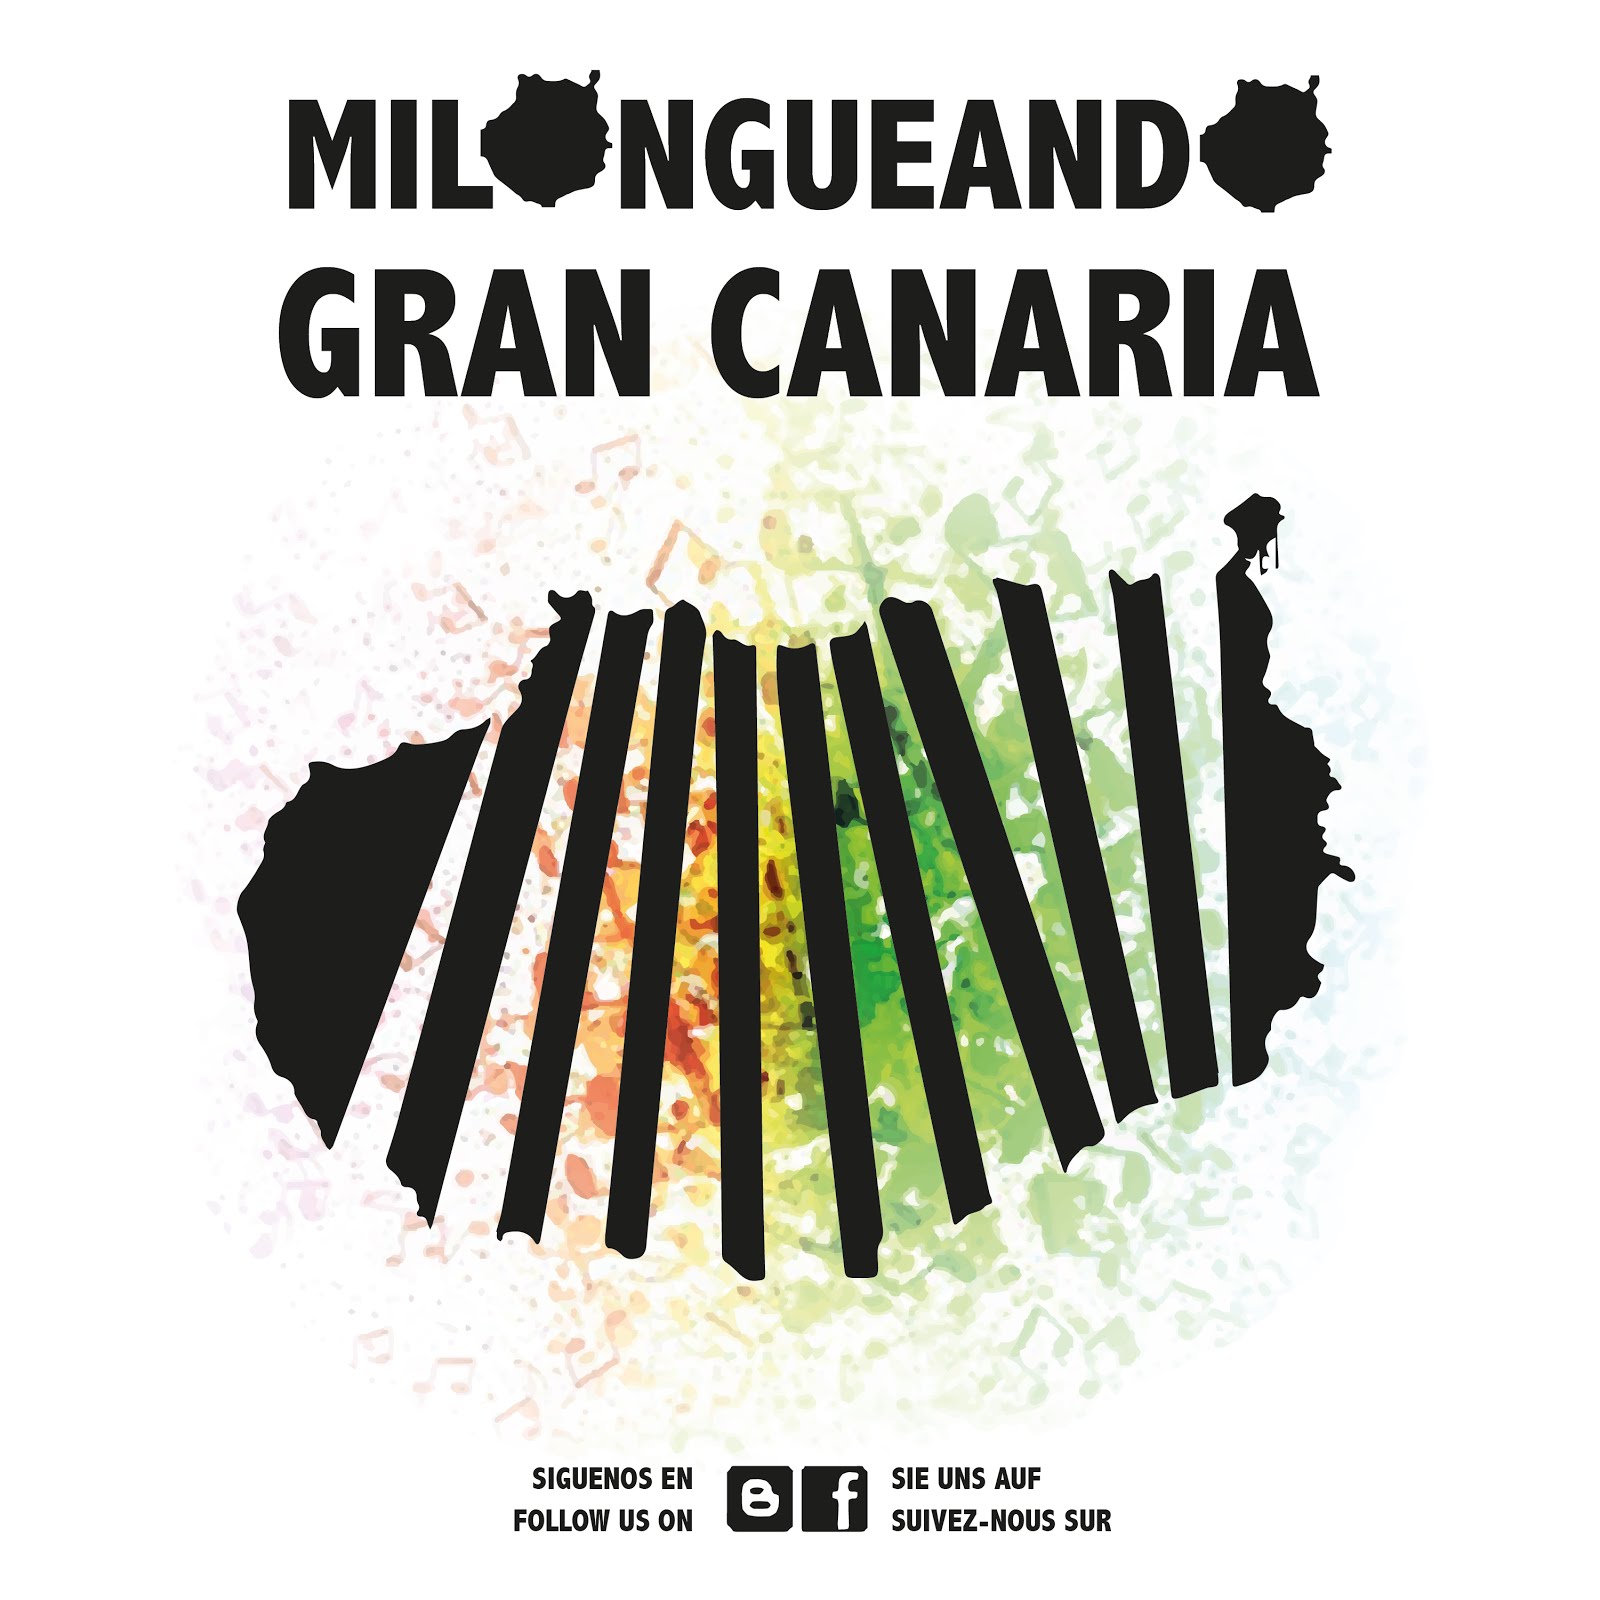 MILONGUEANDO GRAN CANARIA